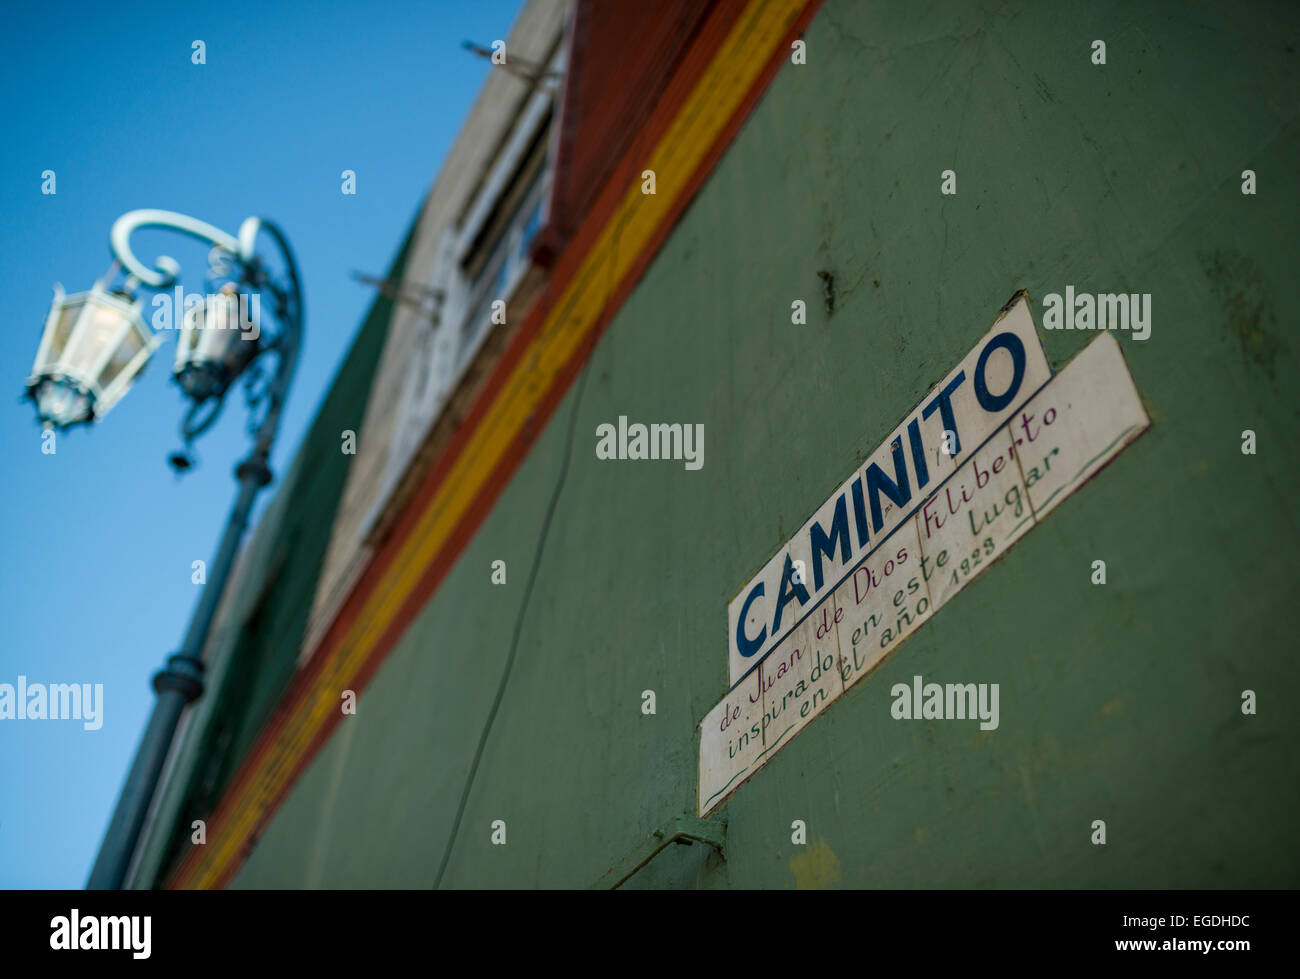 Strada segno, El Caminito, La Boca, Buenos Aires, Argentina Foto Stock